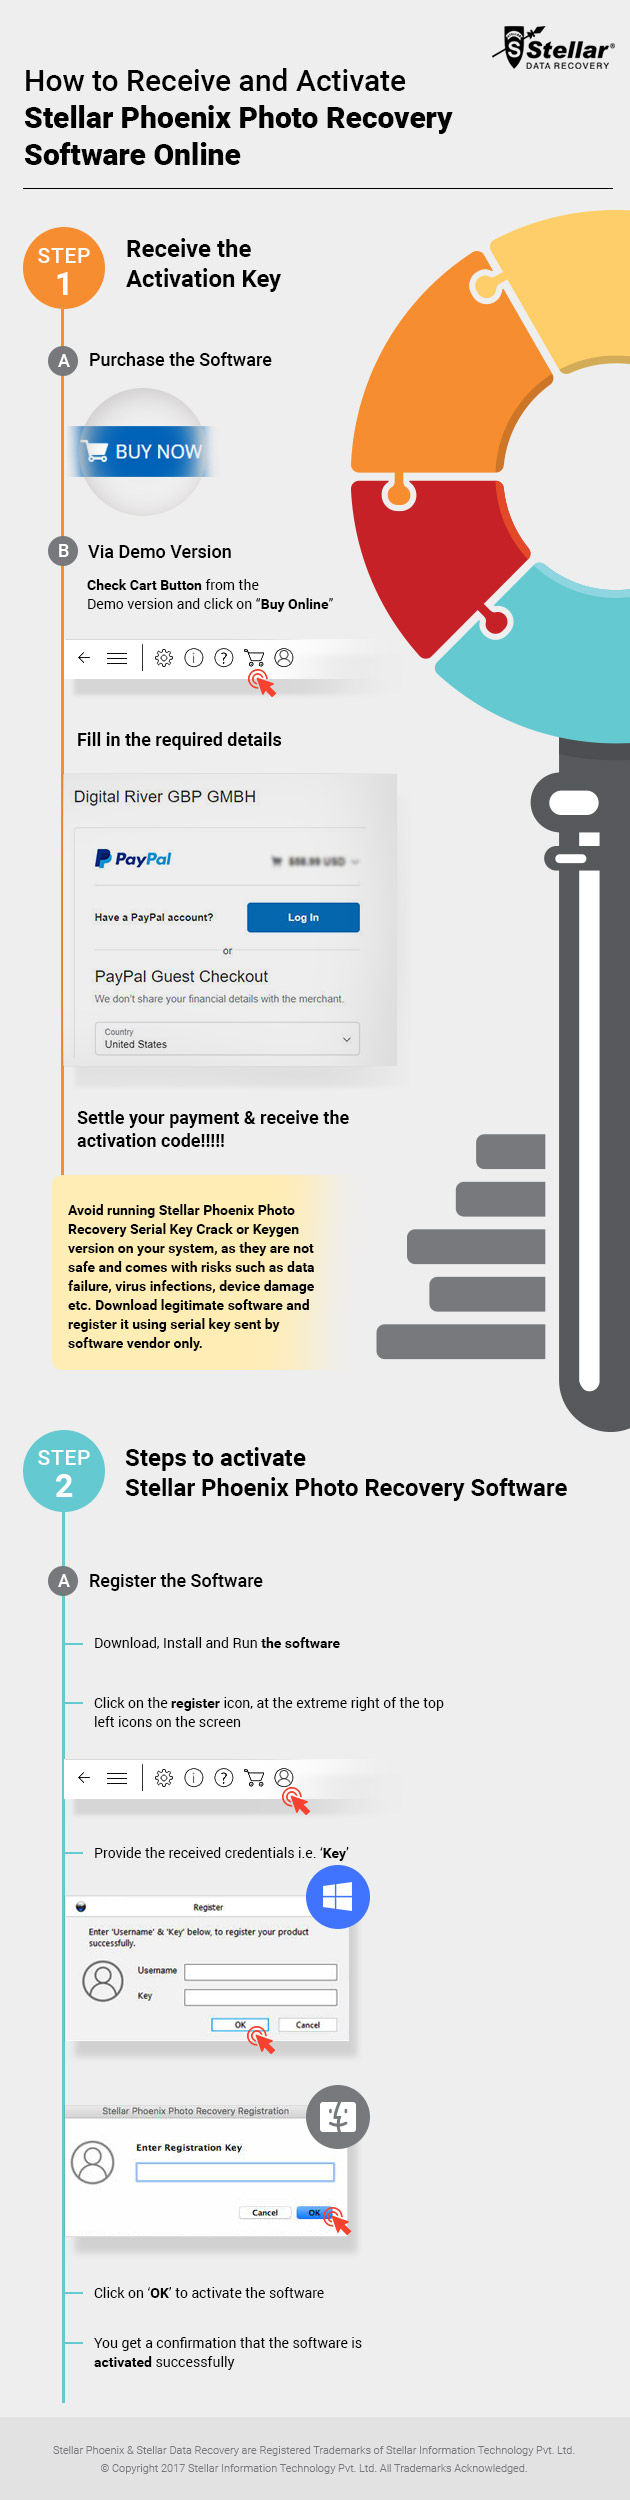 stellar phoenix photo recovery registration key